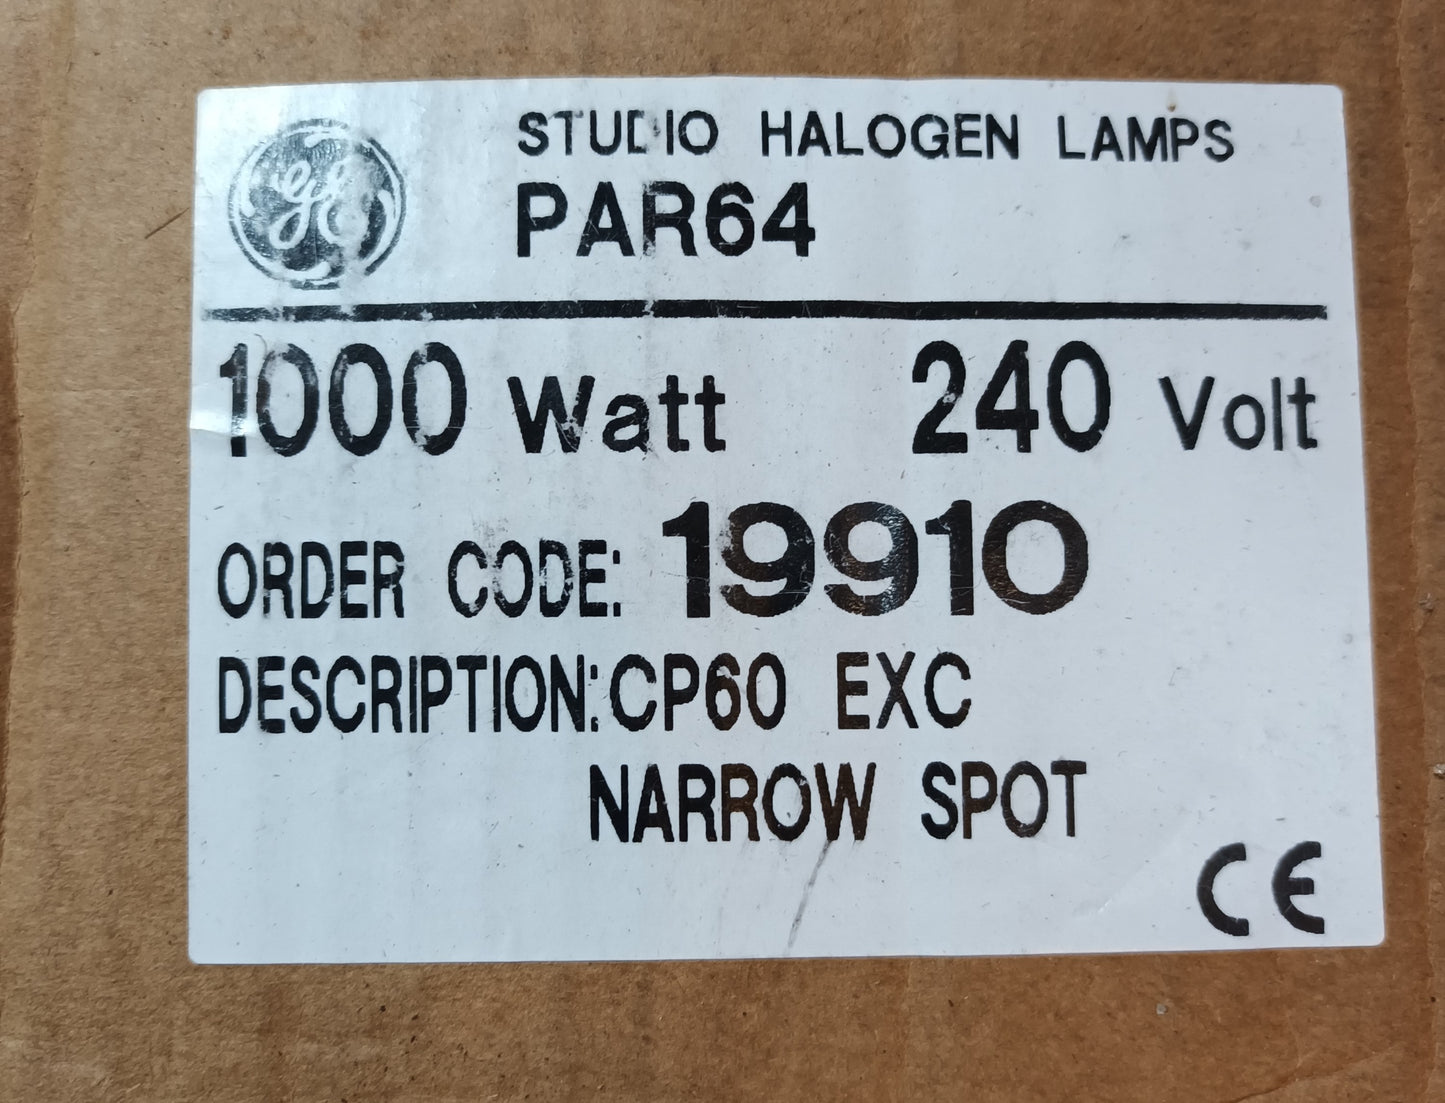 Par64 1000W 240V Studio Halogen Lamp 19910 Narrow Spot CP60 EXC by GE